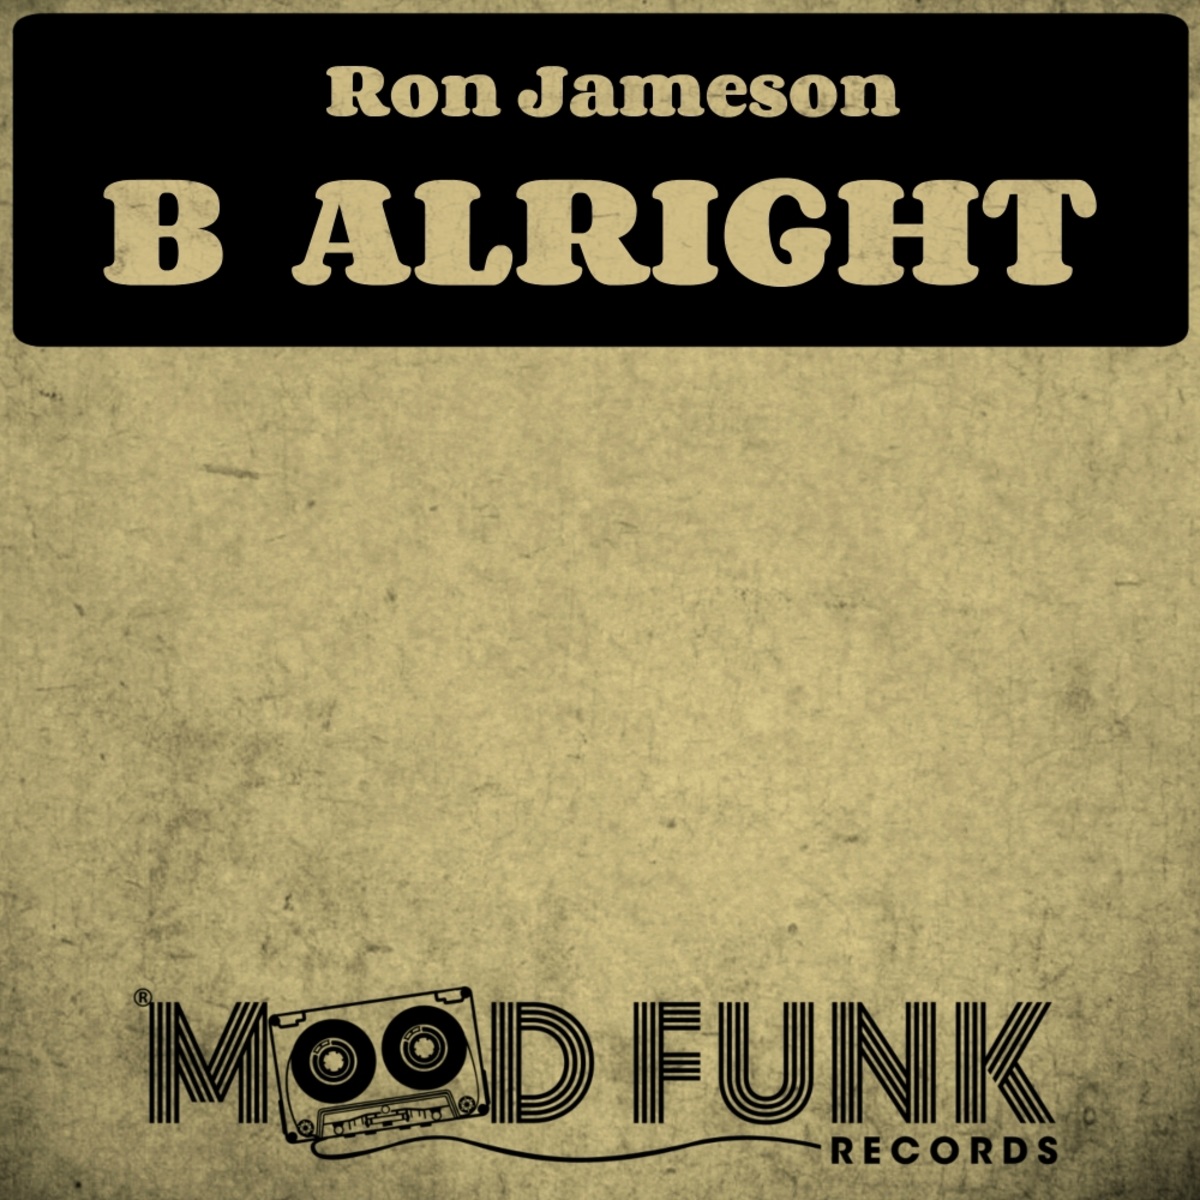 Ron Jameson - B Alright / Mood Funk Records